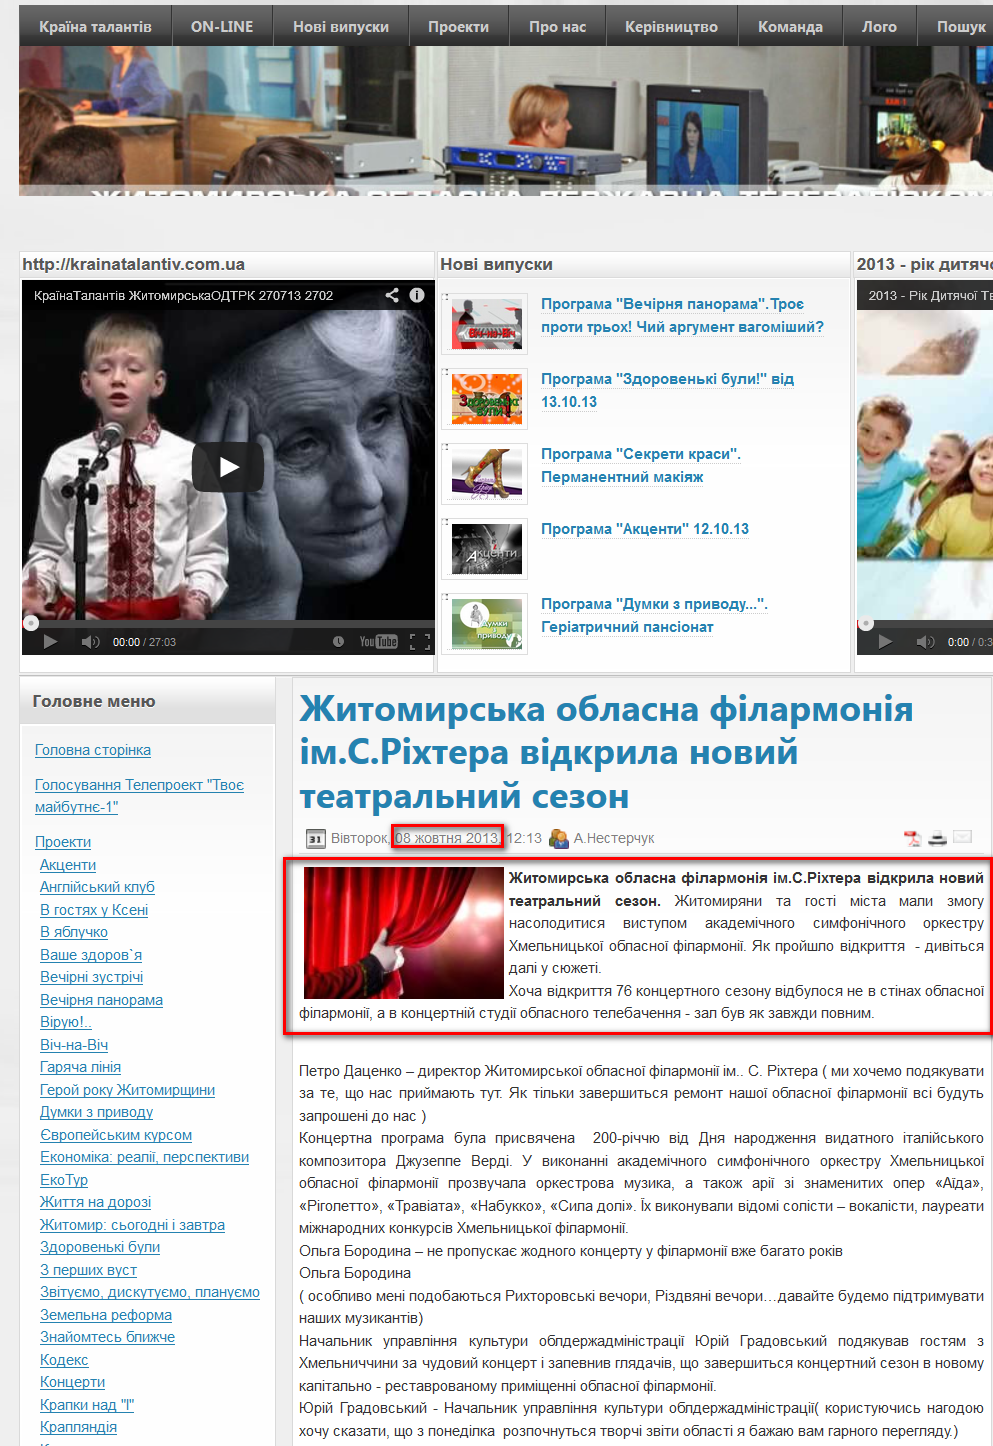 http://tvradiozt.com.ua/index.php?option=com_content&view=article&id=10160:2013-10-08-13-19-35&catid=1:latest-news&Itemid=180